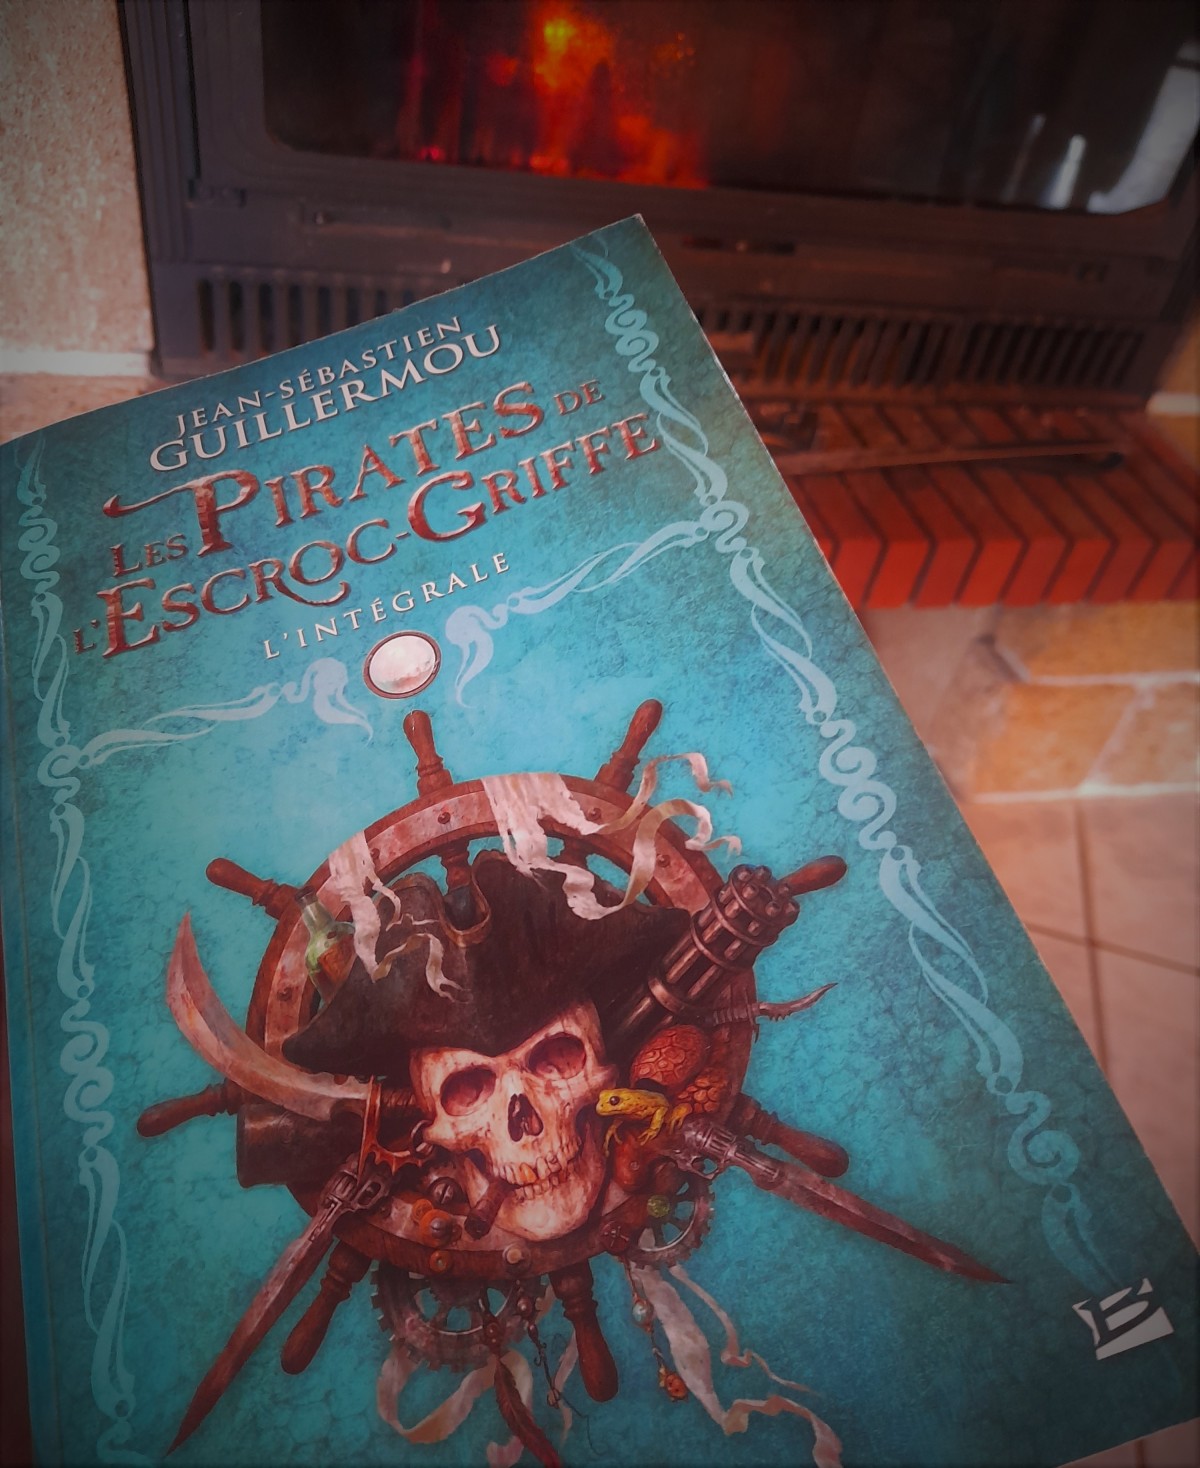 Les Pirates de l’Escroc-Griffe #1 : Les Terres Interdites (2015), Jean-Sebastien Guillermou